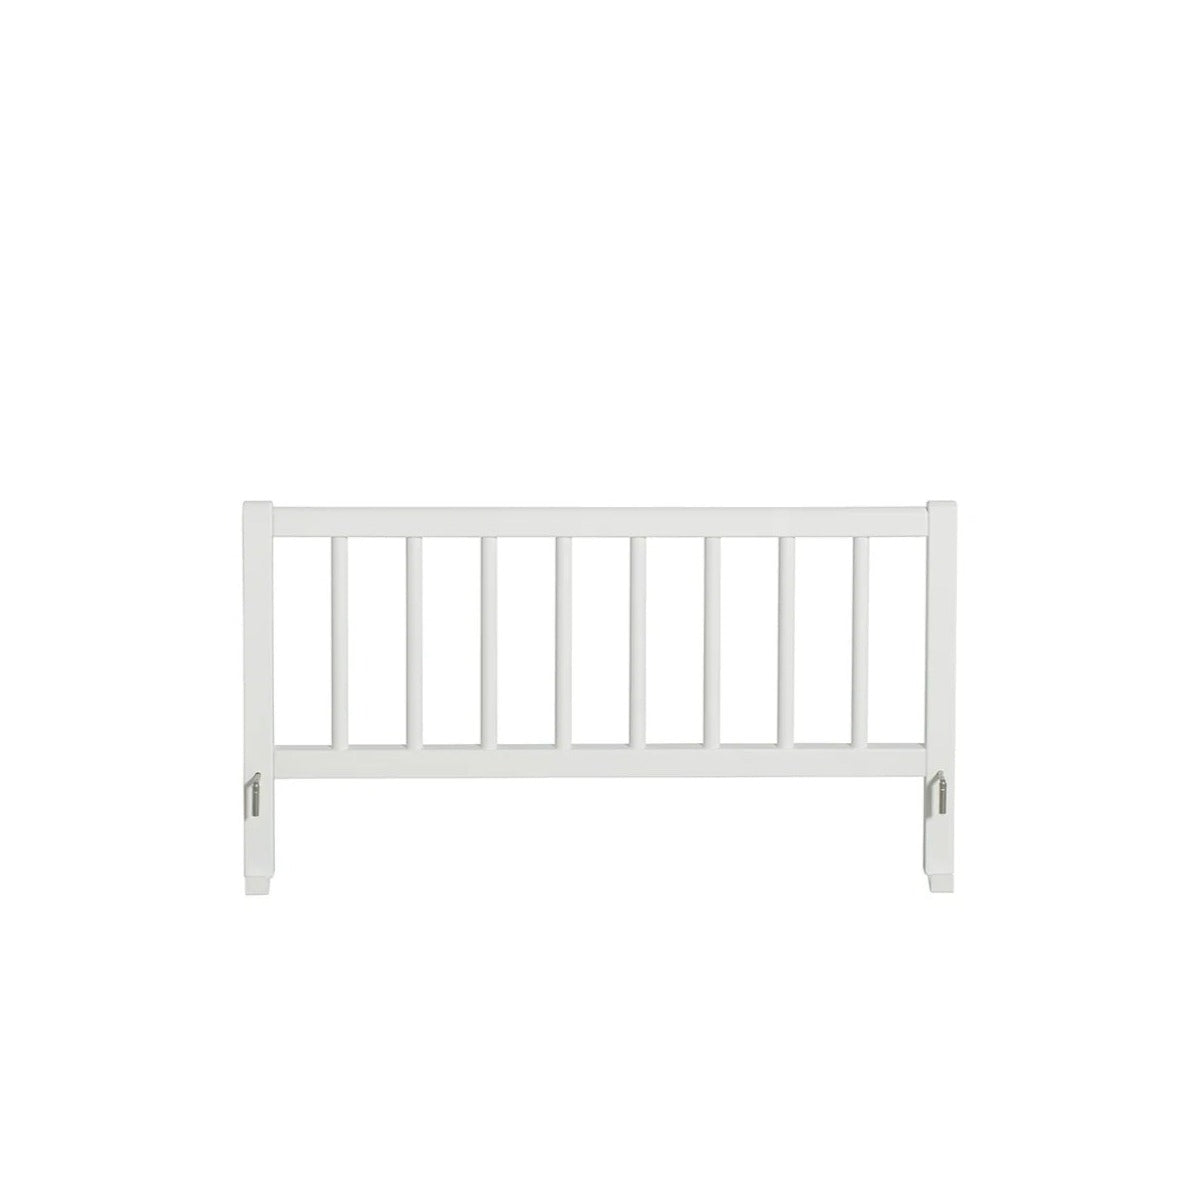 Oliver Furniture Wood Original Junior Day Bed - White